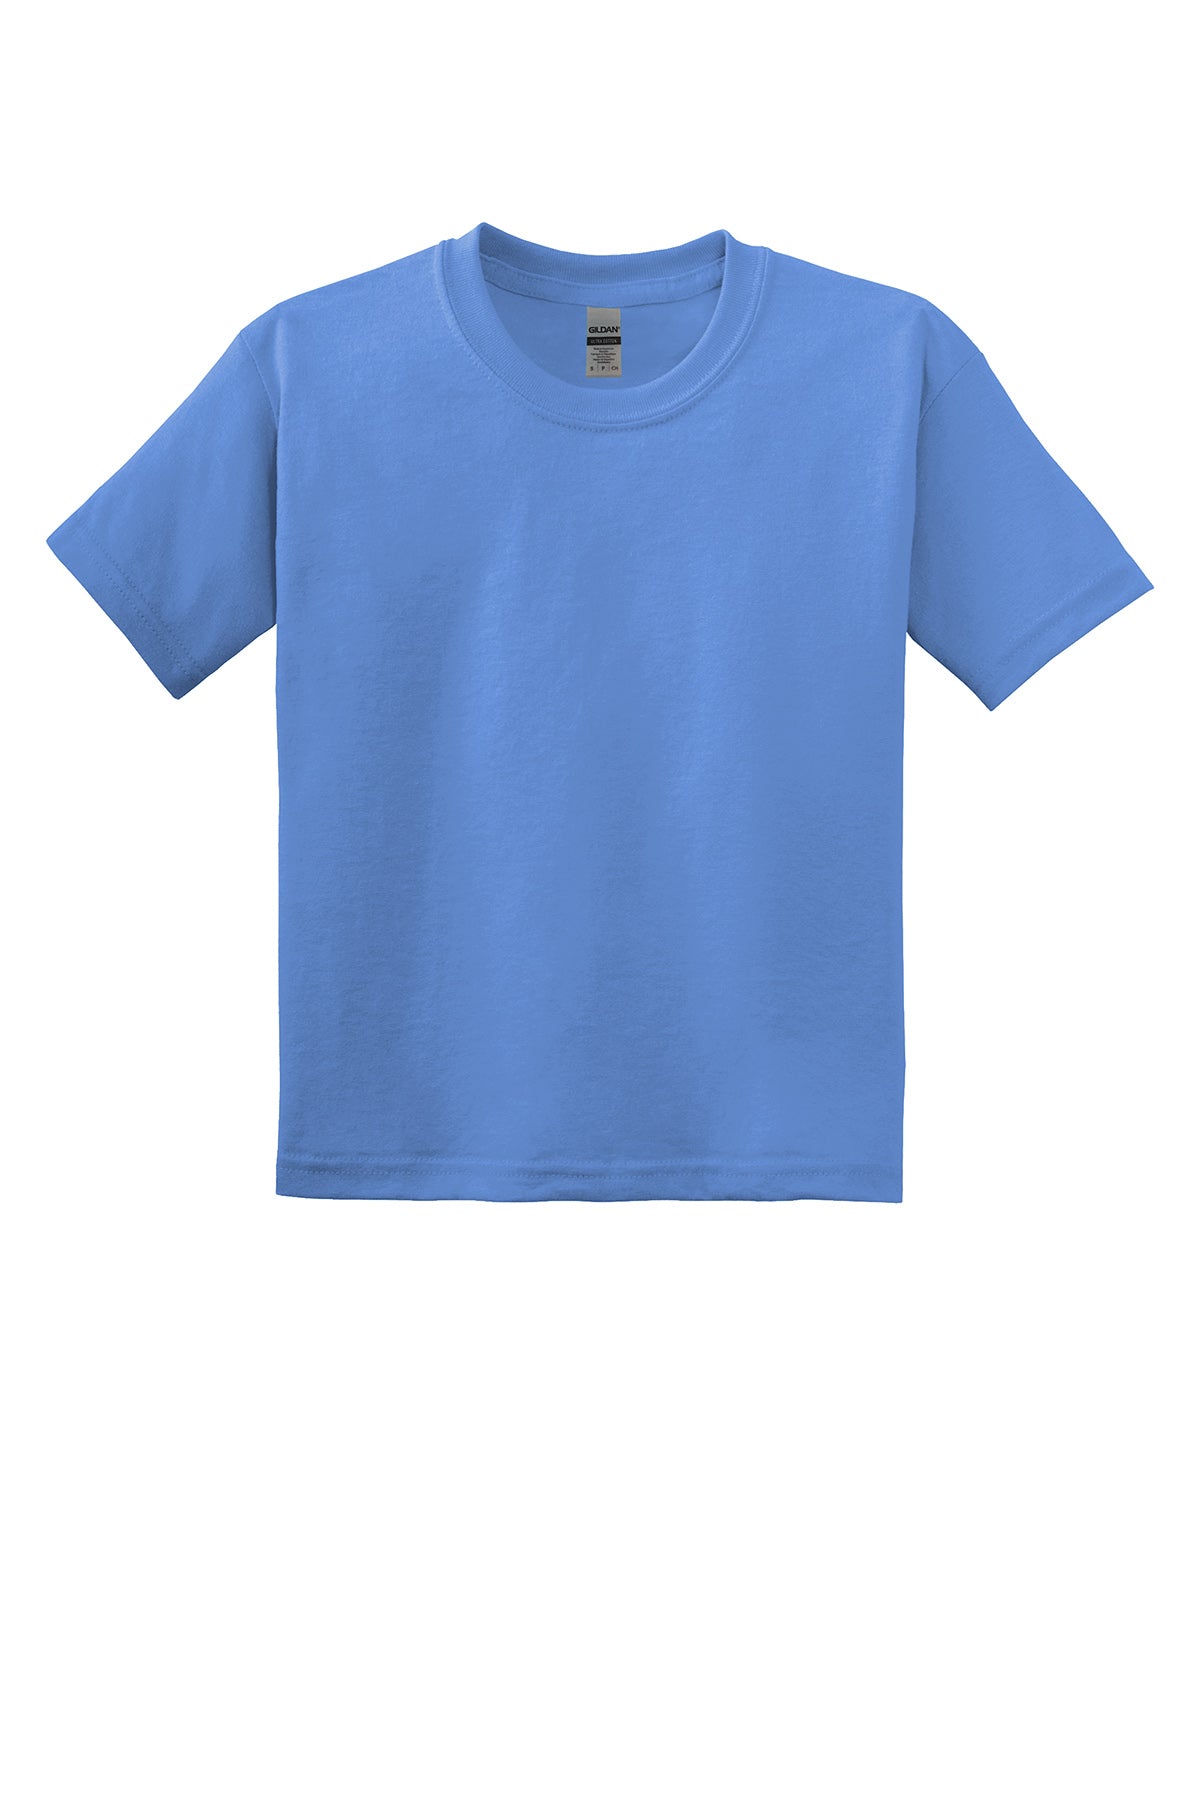 Gildan 8000B Youth Dryblend T-Shirt Yth Small / Carolina Blue